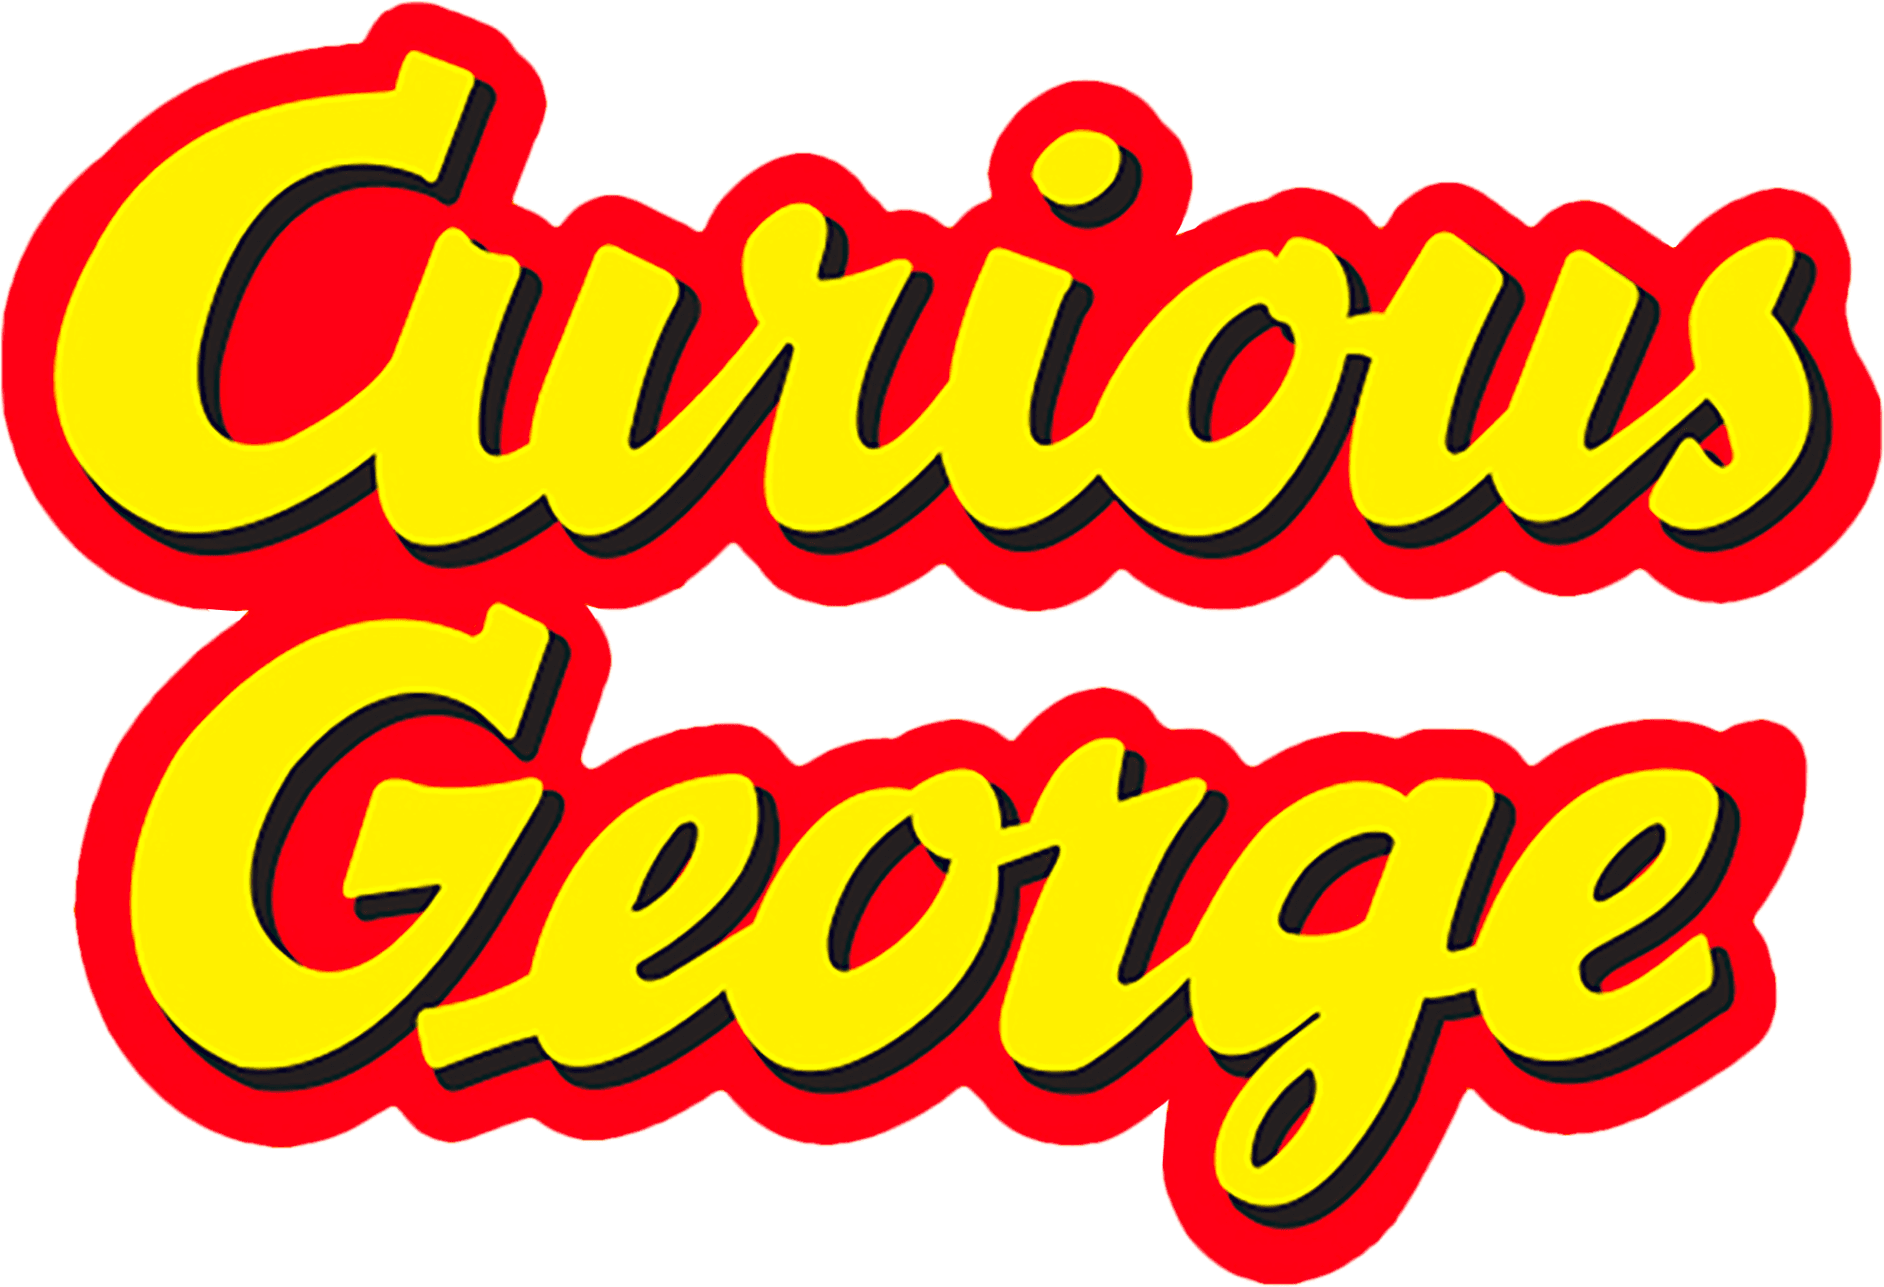 Curious George logo